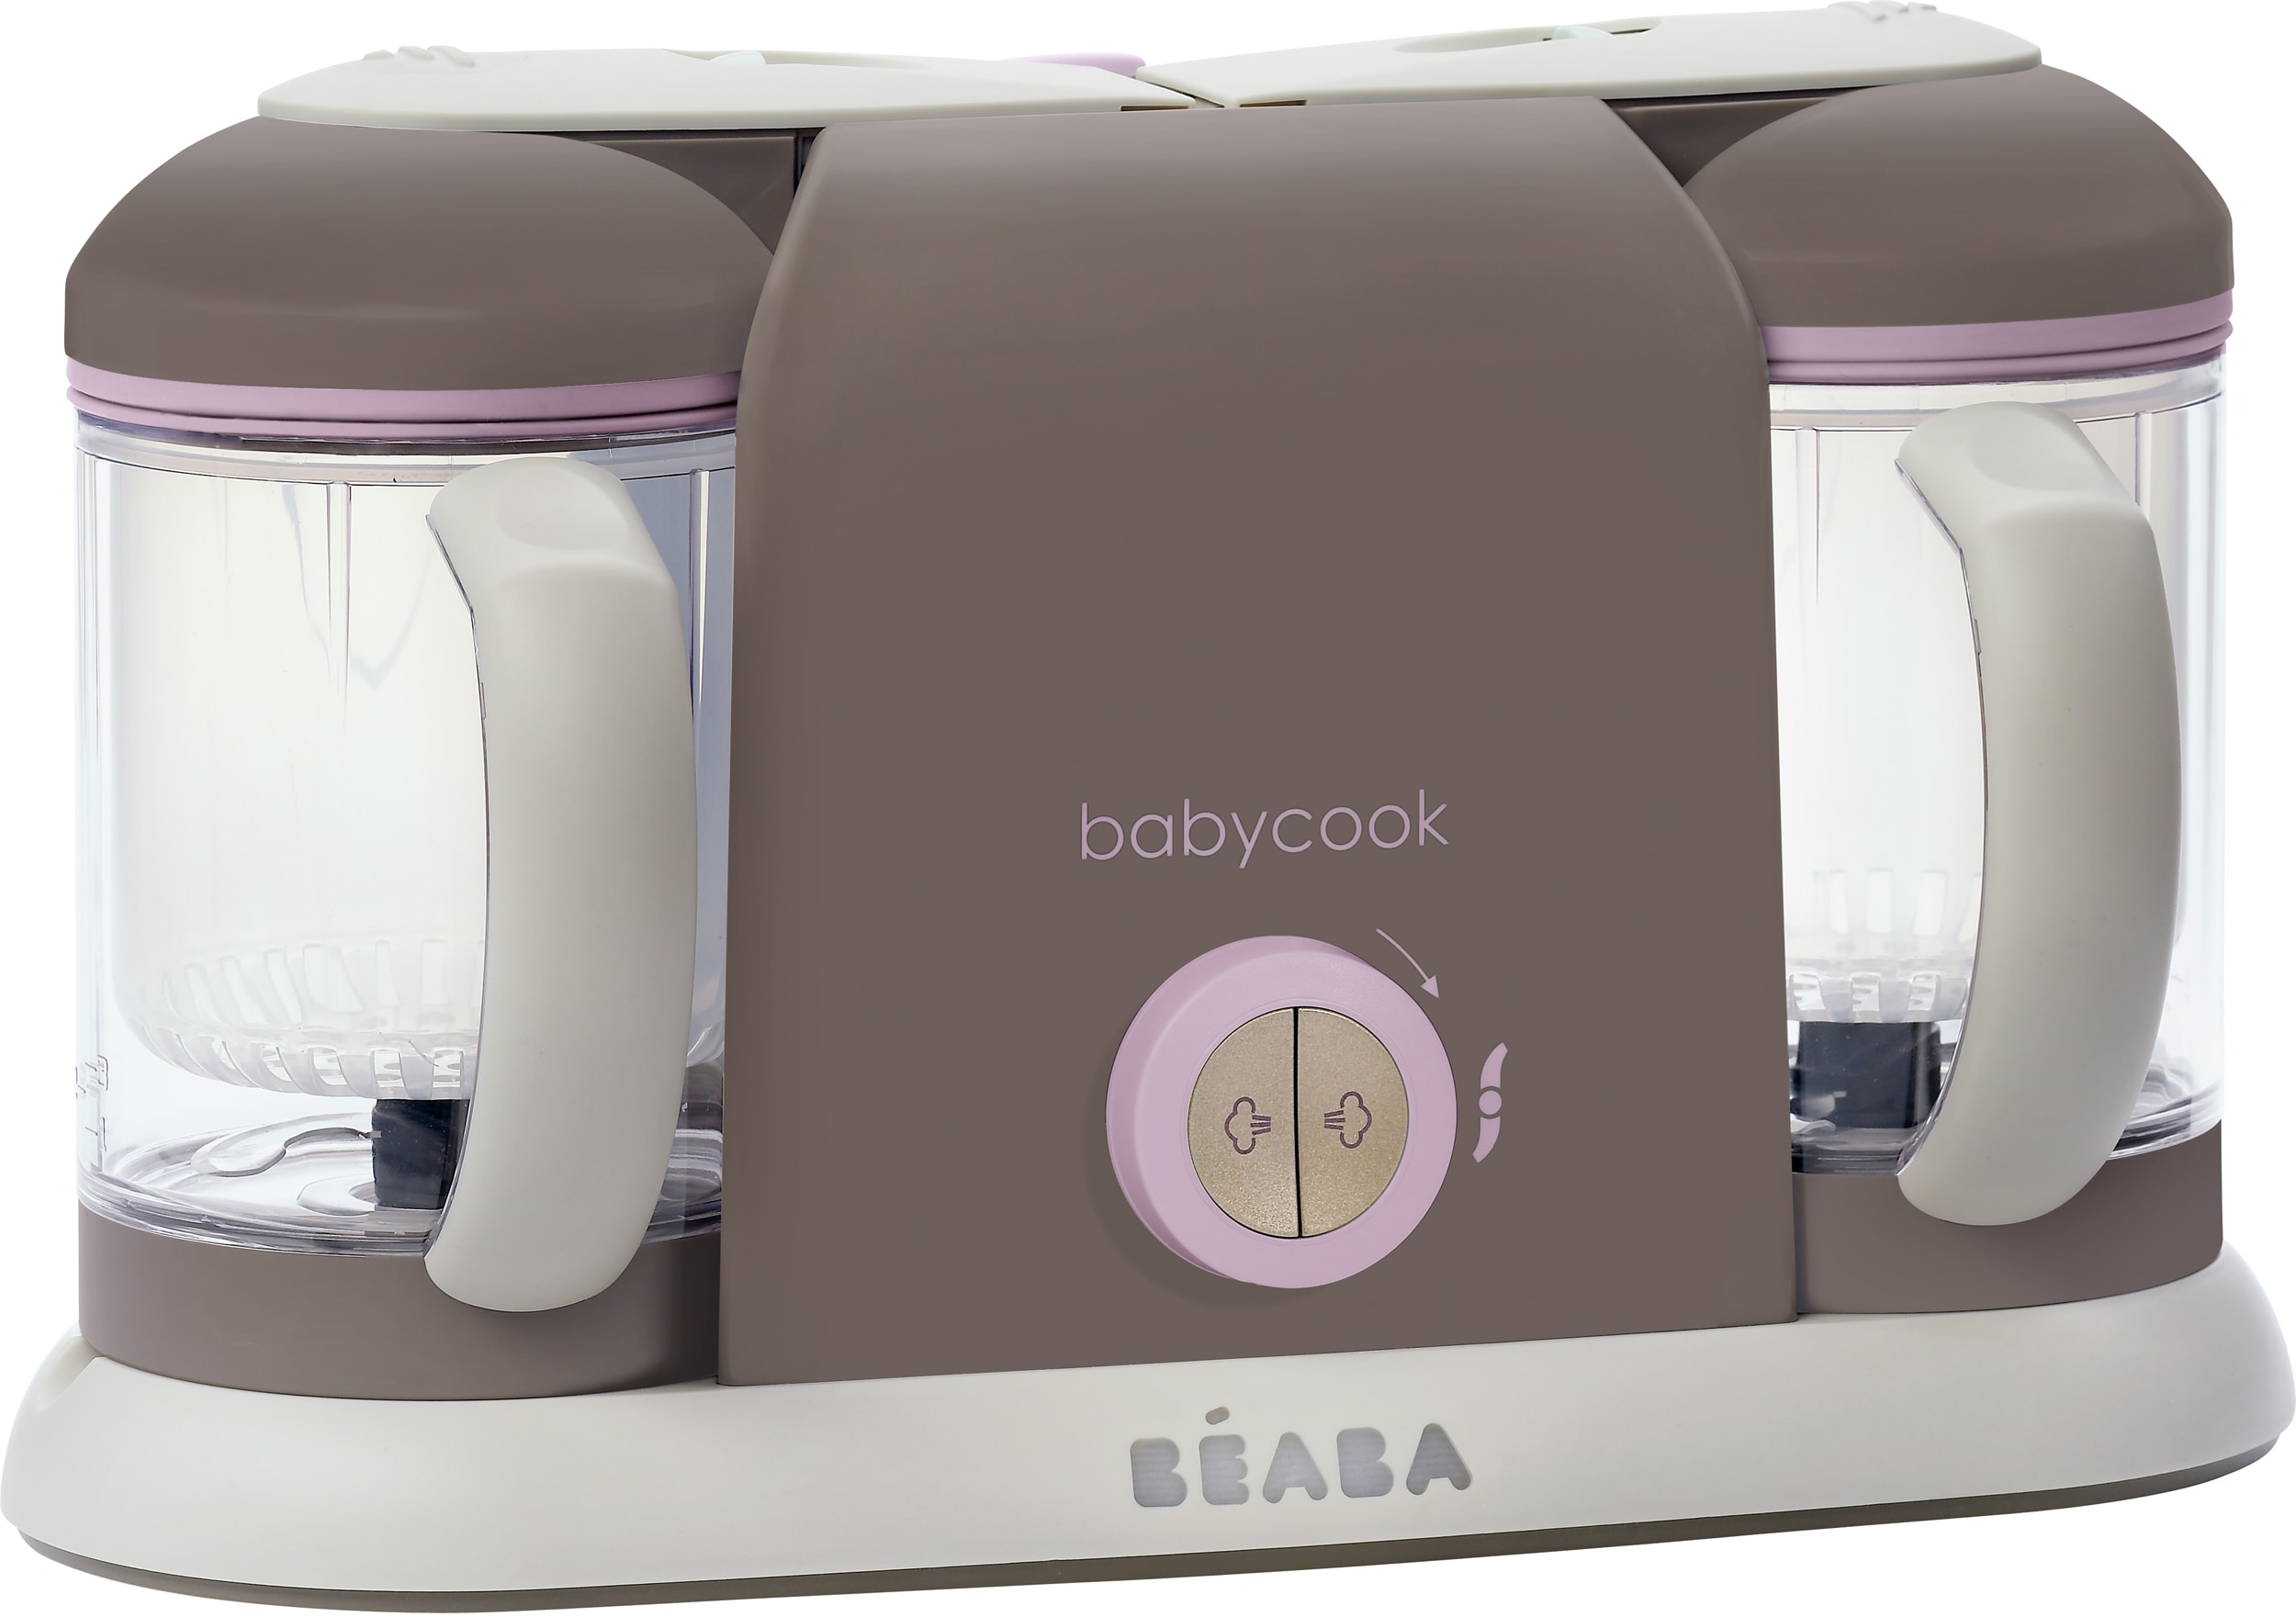 Robot connecté BEABA Babycook Smart - gris anthracite, Puériculture